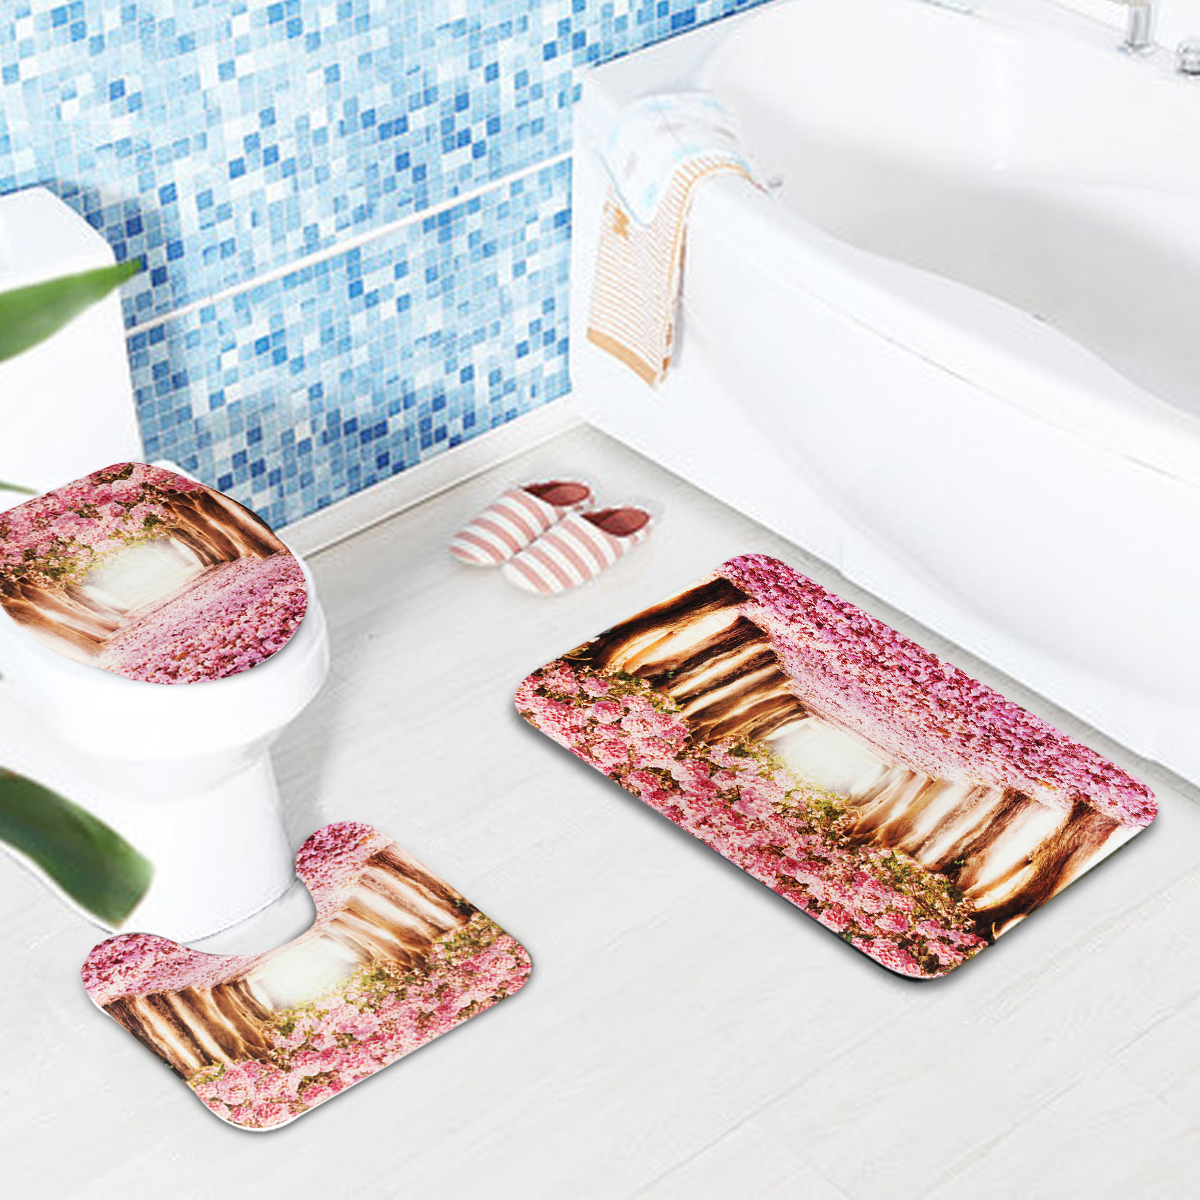 Find 3Pcs/Set Sakura Pattern Home Bathroom Non Slip Pedestal Rug Lid Toilet Cover Bath Mat Carpet Pad for Sale on Gipsybee.com with cryptocurrencies